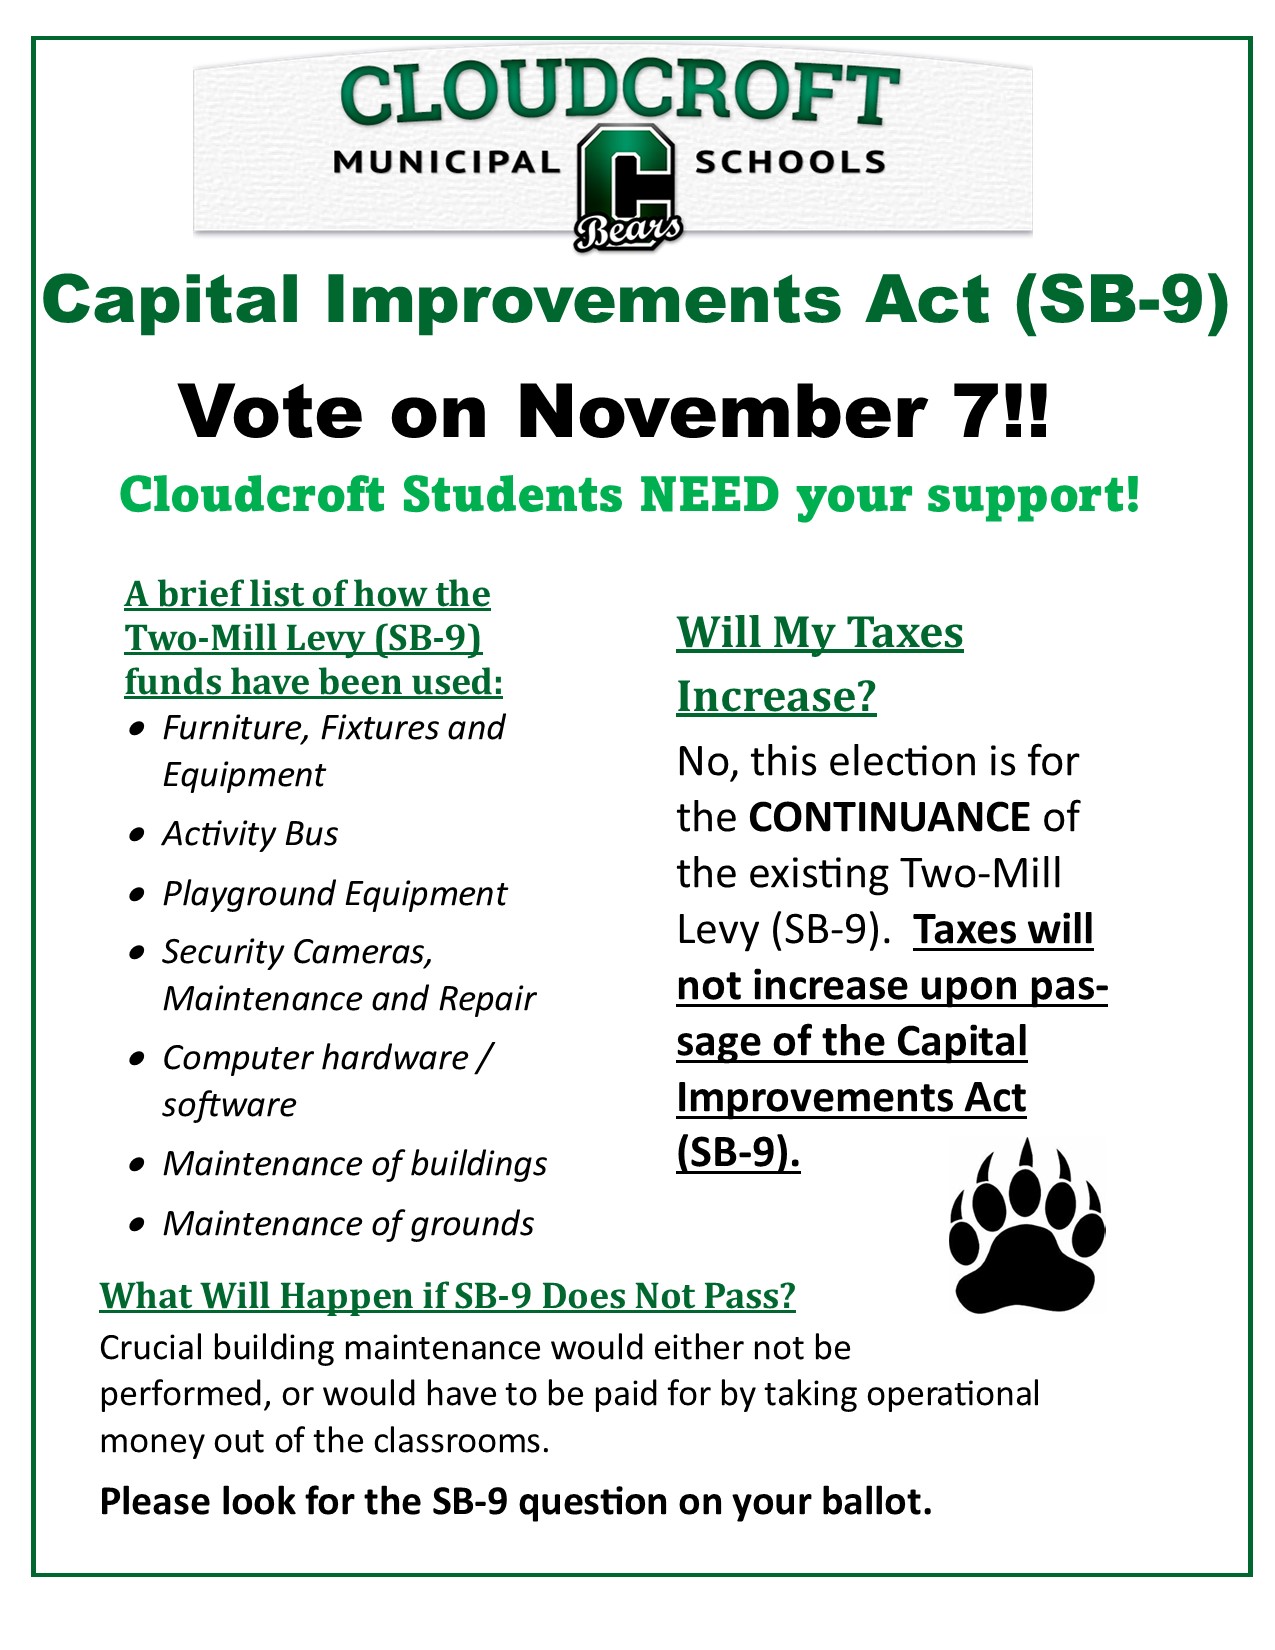 Capital Improvements Voting flyer